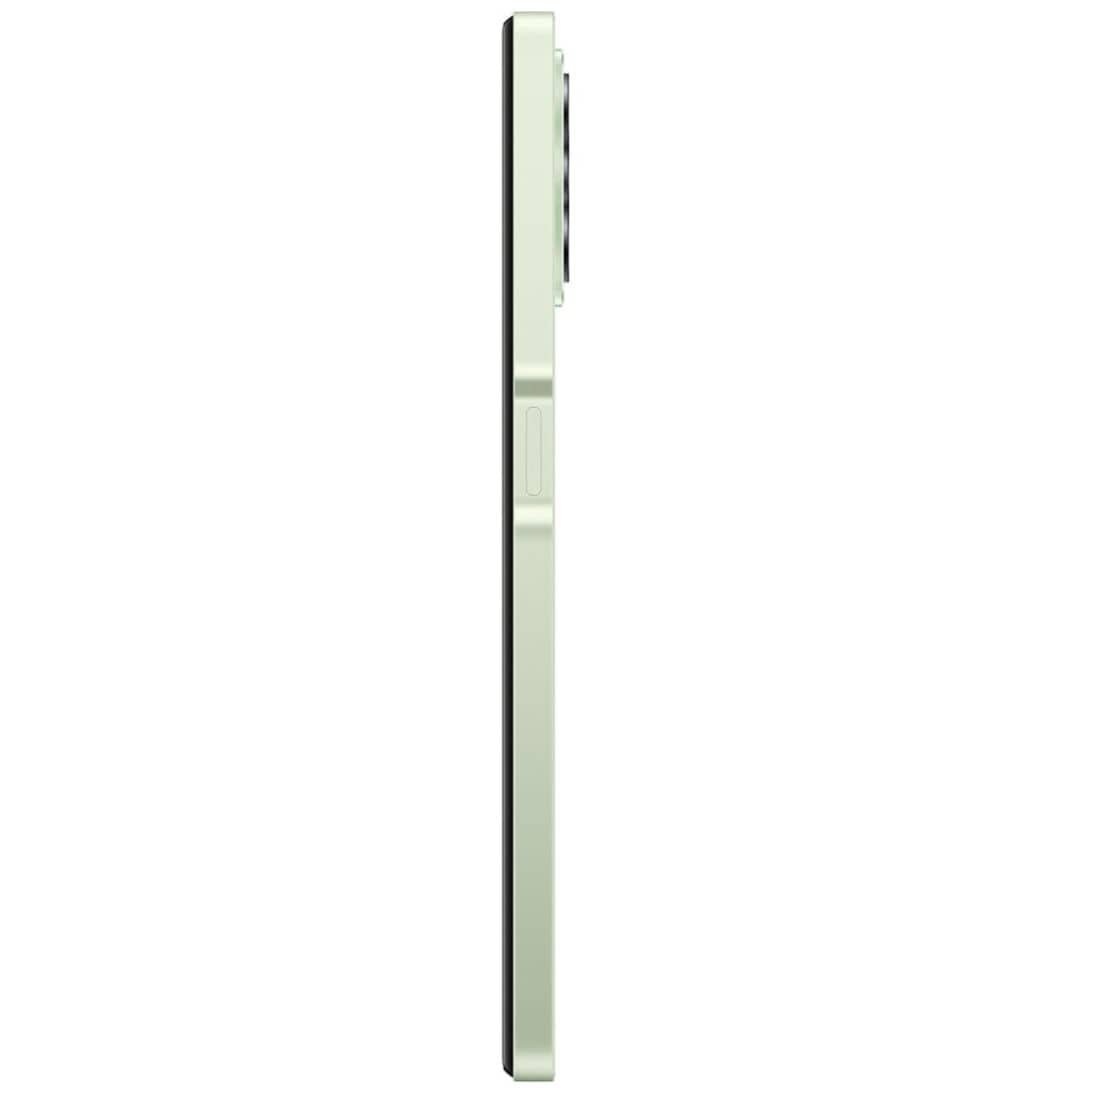 Celular Realme C35+ 64Gb Color Verde (Open)